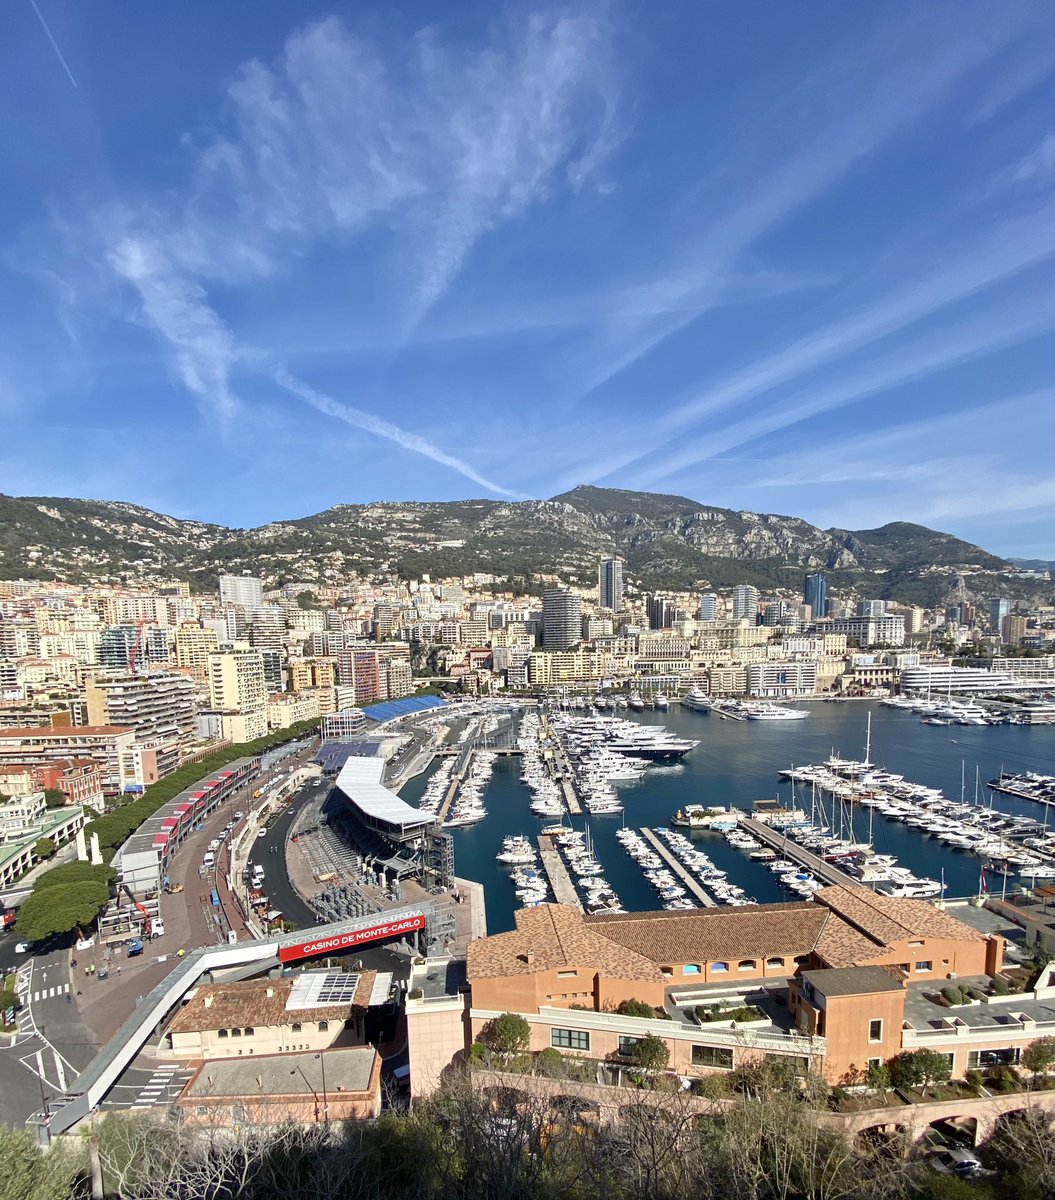 The money shot 📸 #PortHercule #YCMMarina #Monaco